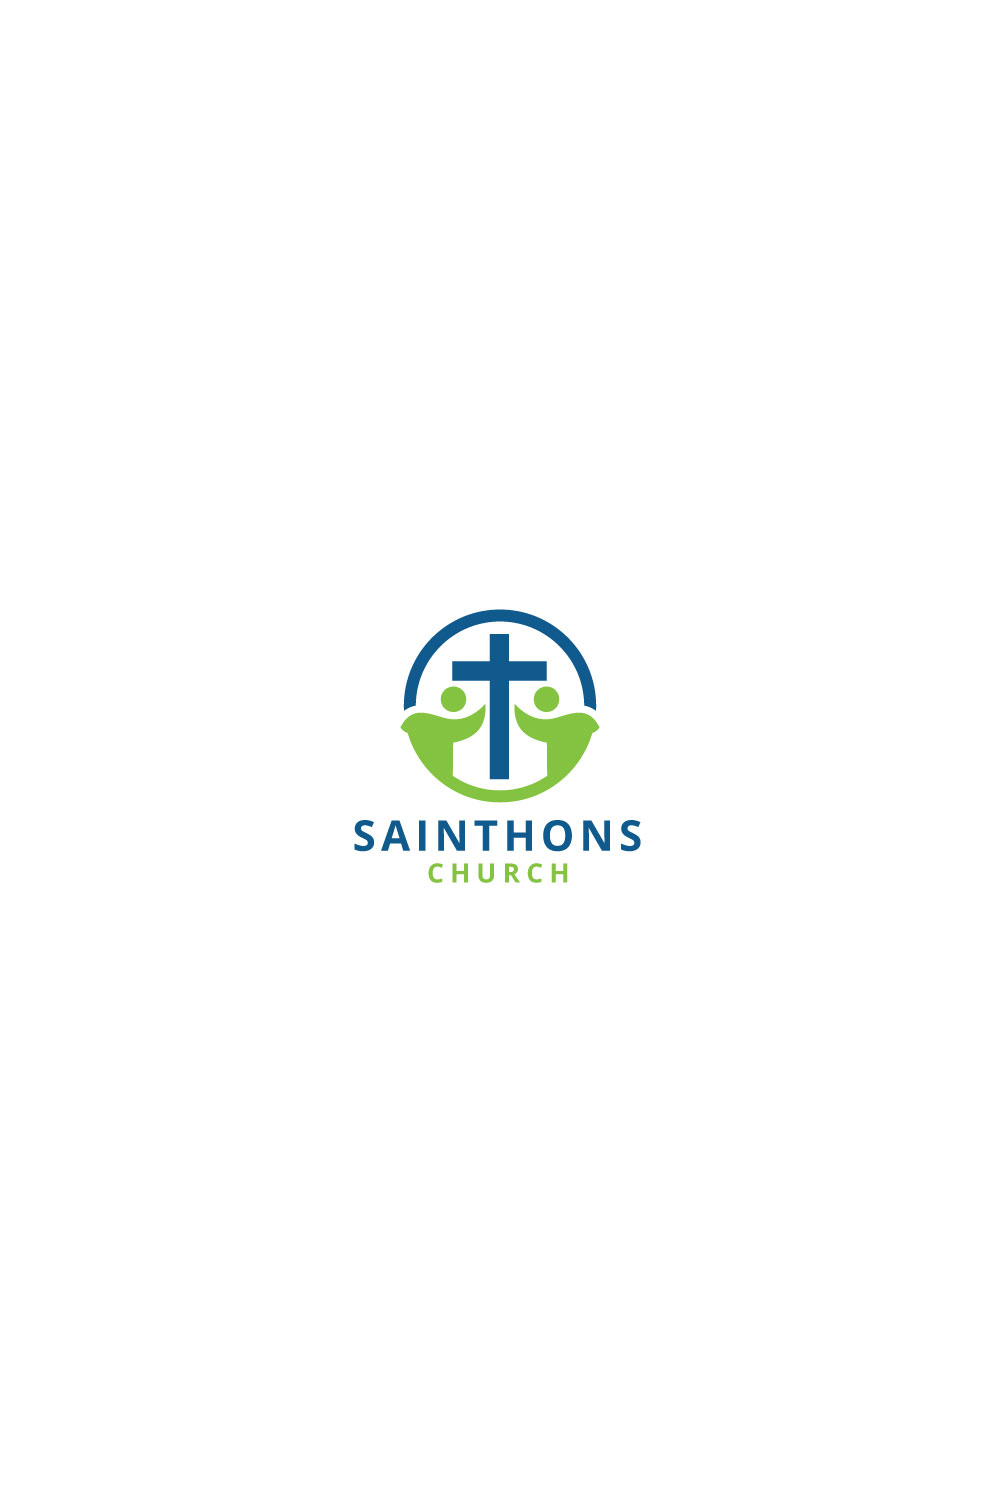 Church logo, religious family icon, Christian sign pinterest preview image.